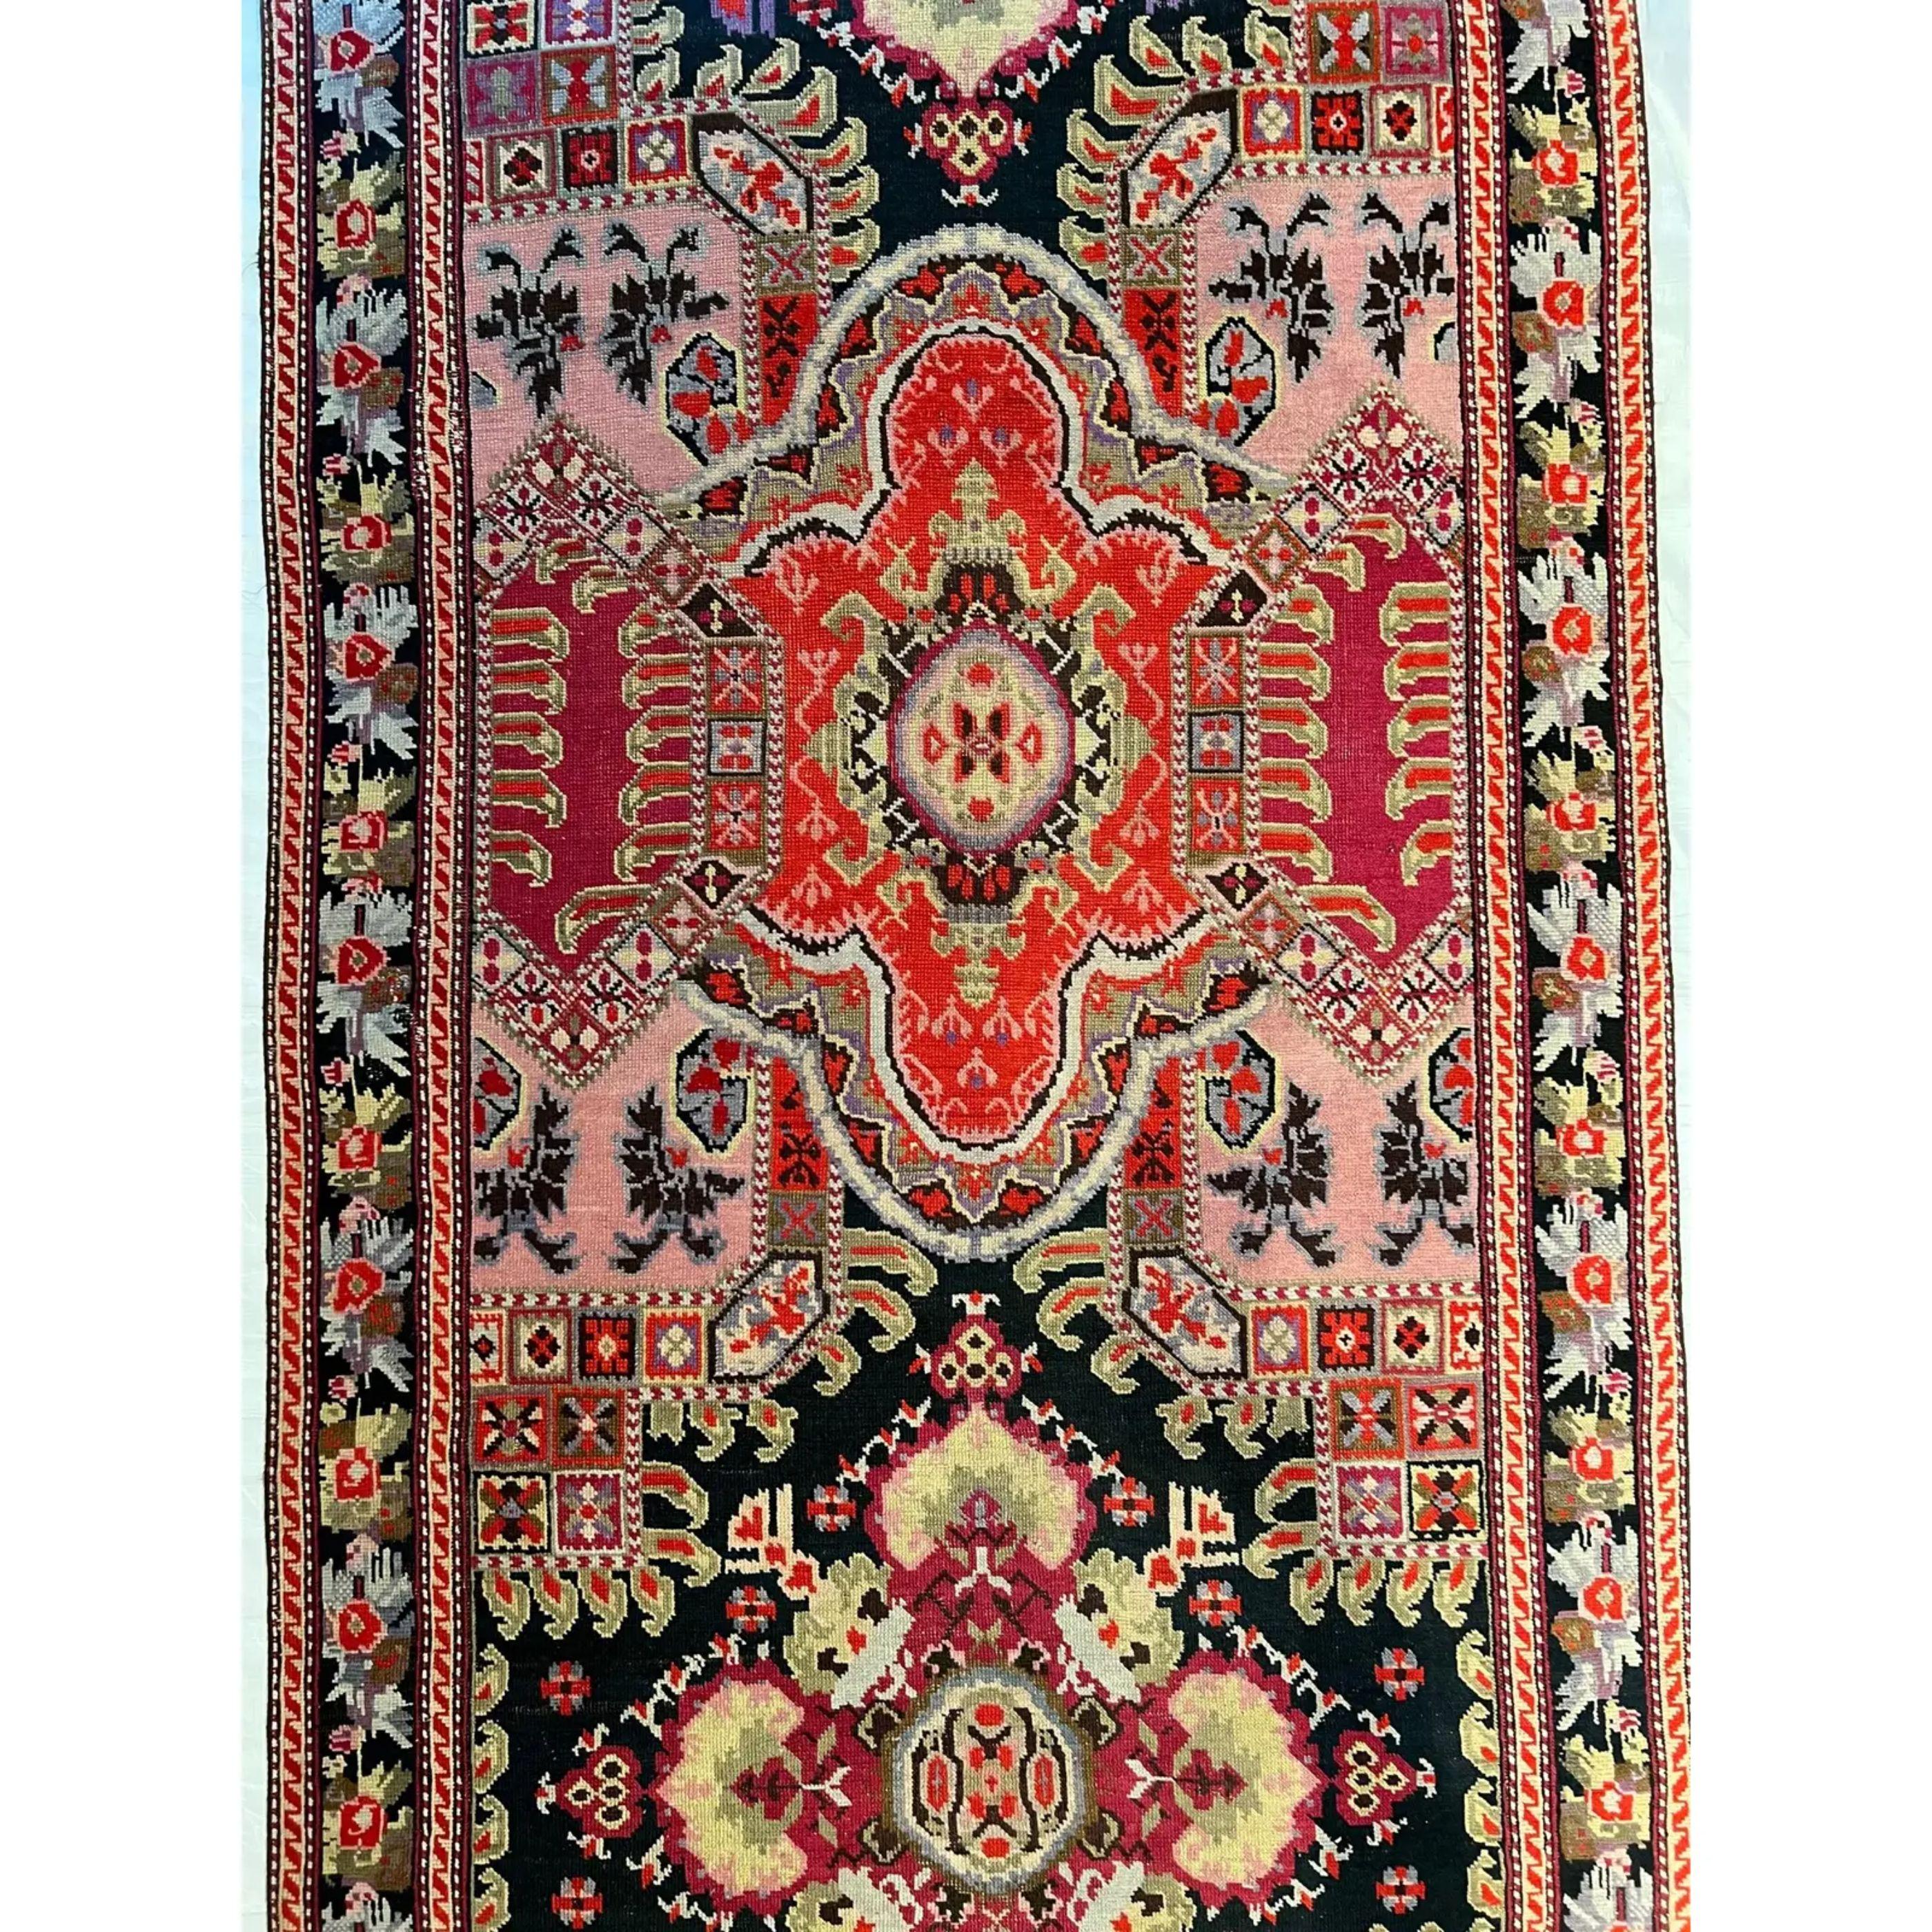 1900s Antique Karabagh Rug, tribal carpet, handmade and hand-knotted